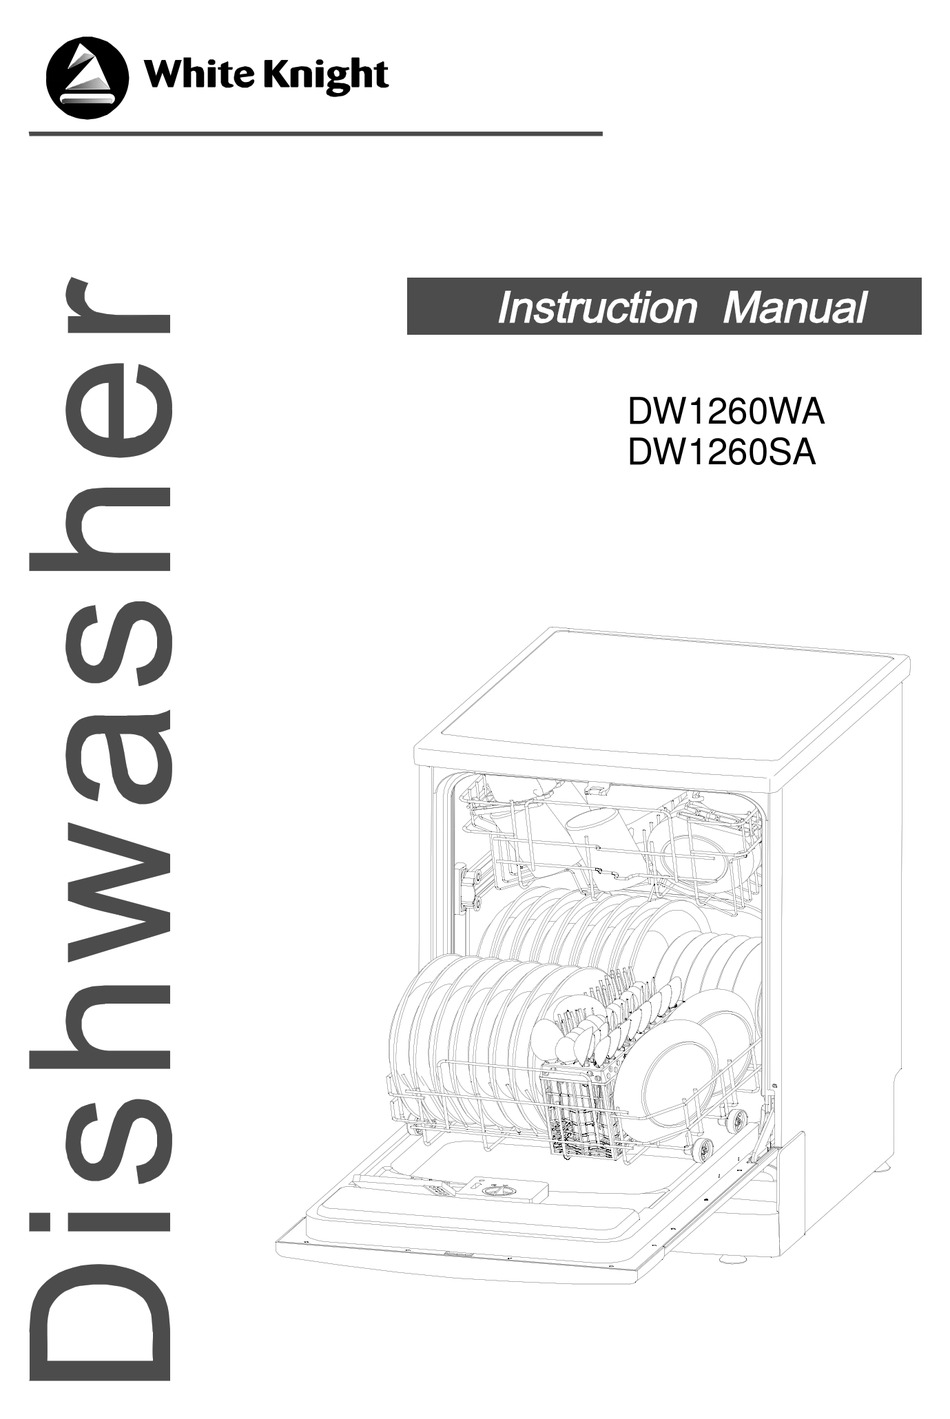 White Knight Dw1260wa Instruction Manual Pdf Download Manualslib